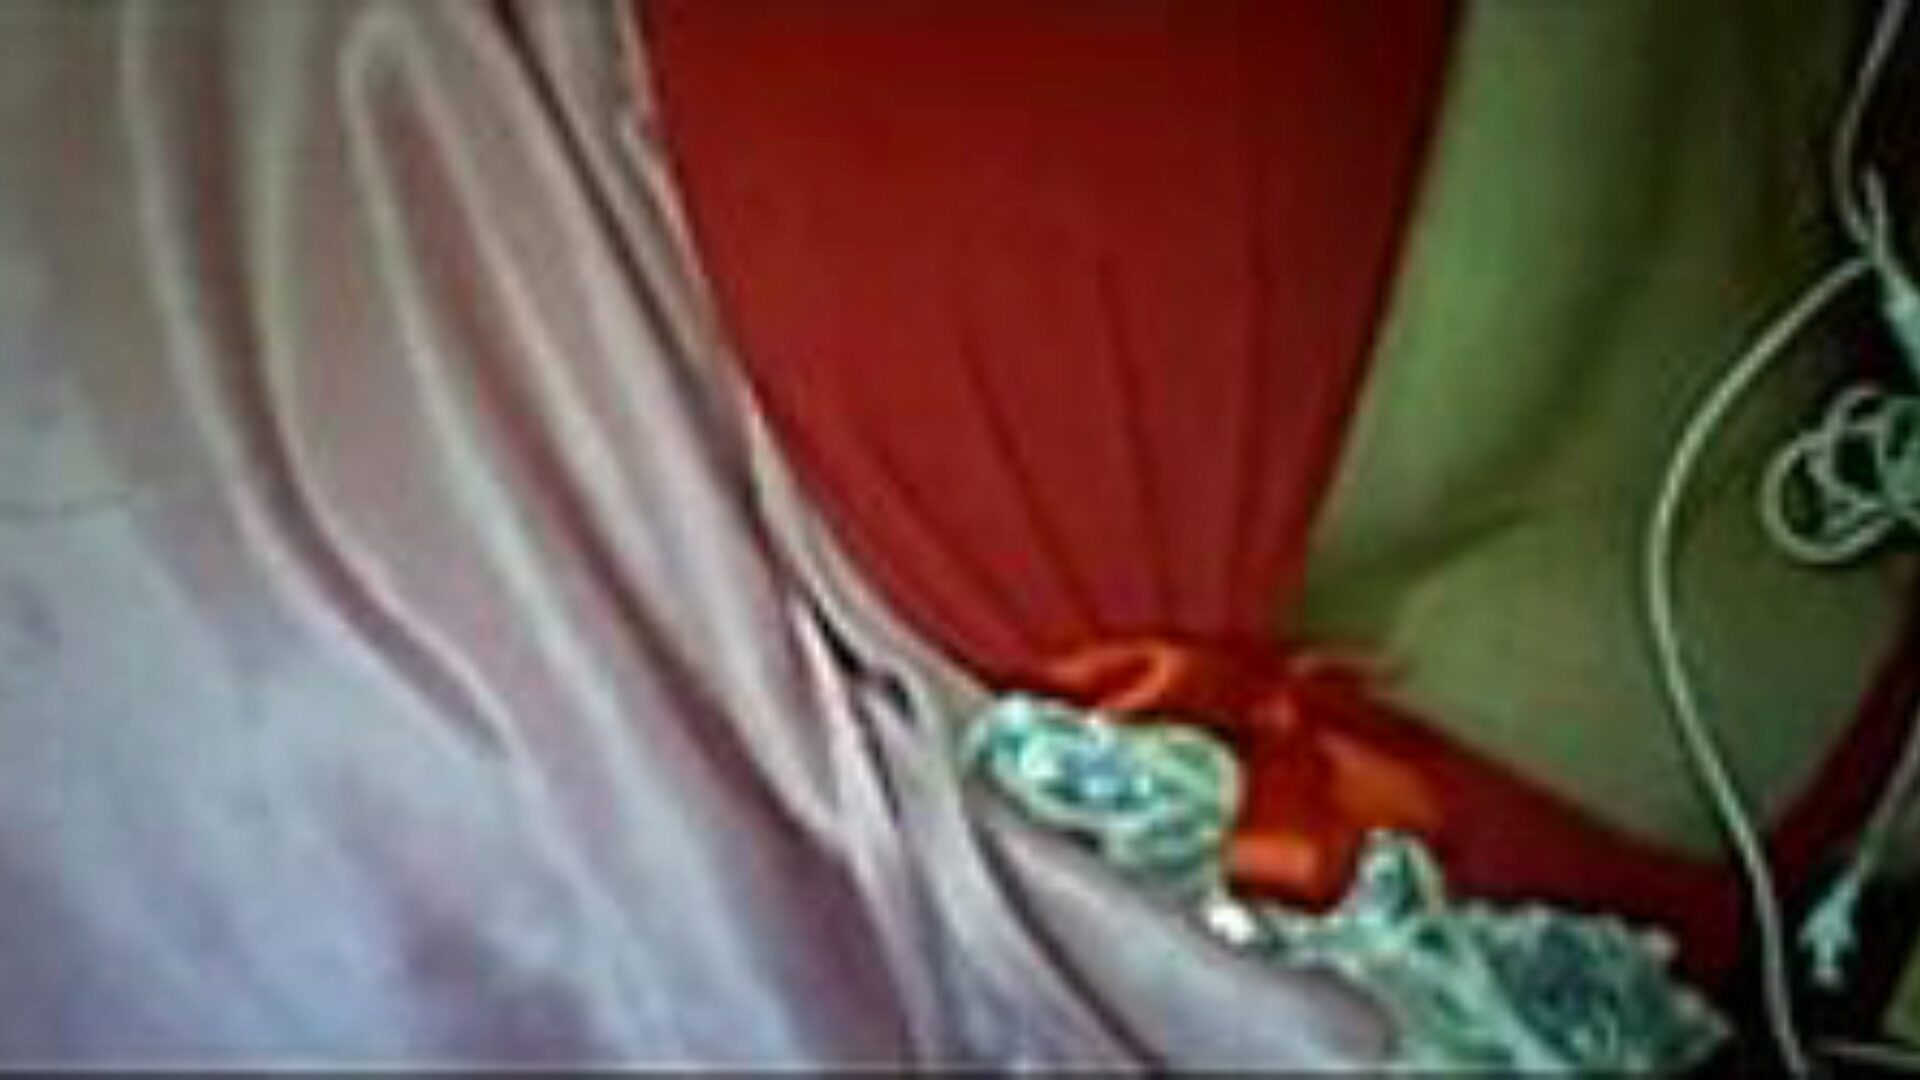 lbwa awi: free big tits & agent porn video a6 - xhamster شاهد lbwa awi tube fuckfest clip مجانًا على xhamster ، مع المجموعة الأكثر جاذبية من مسلسلات الحلقات الإباحية المصرية العربية وكبيرة الثدي والوكيل